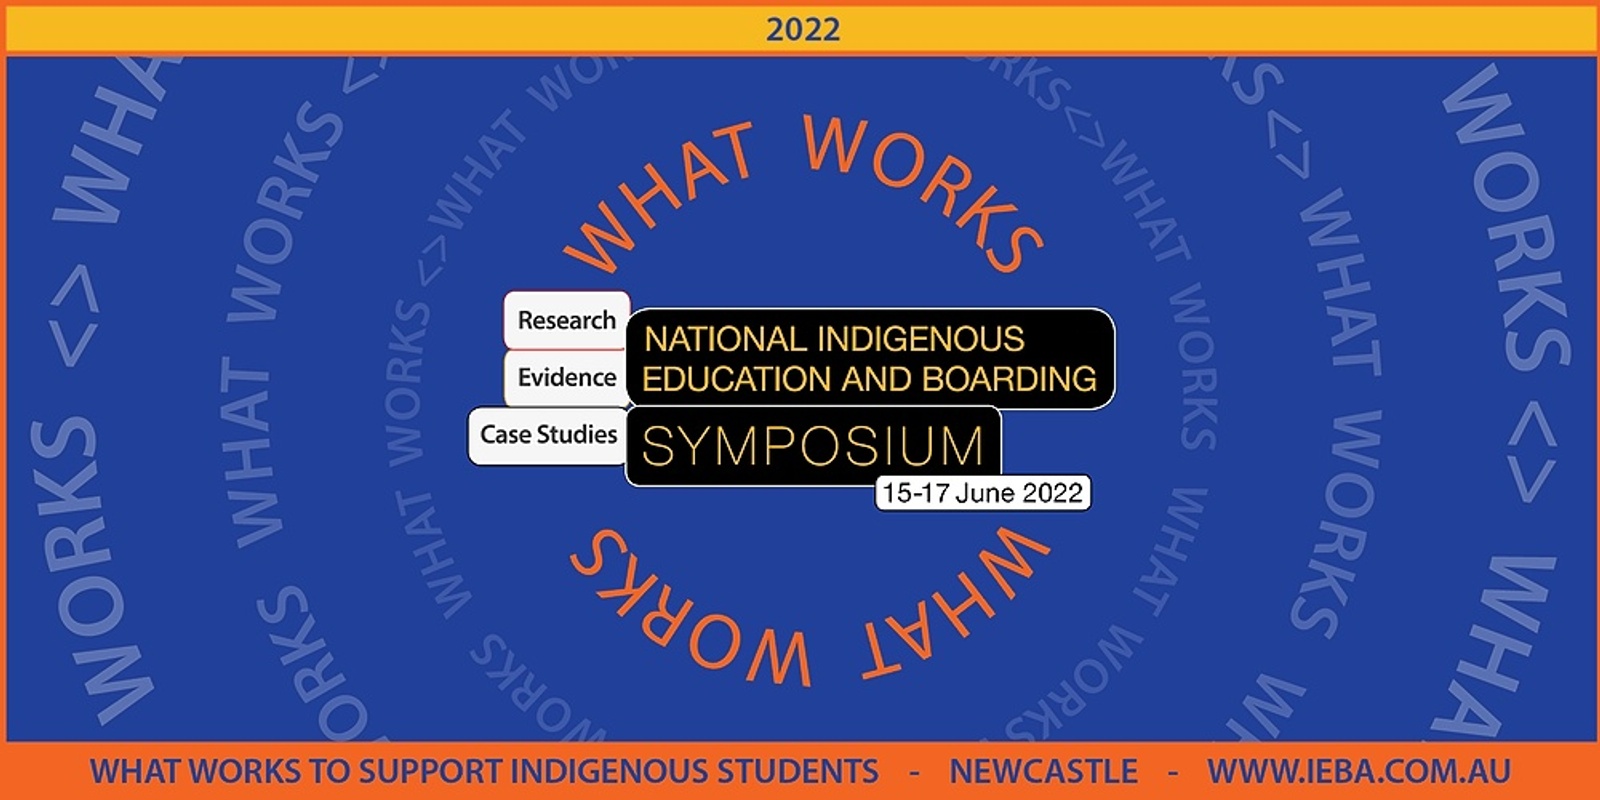 Banner image for 2022 National Indigenous Education & Boarding Symposium